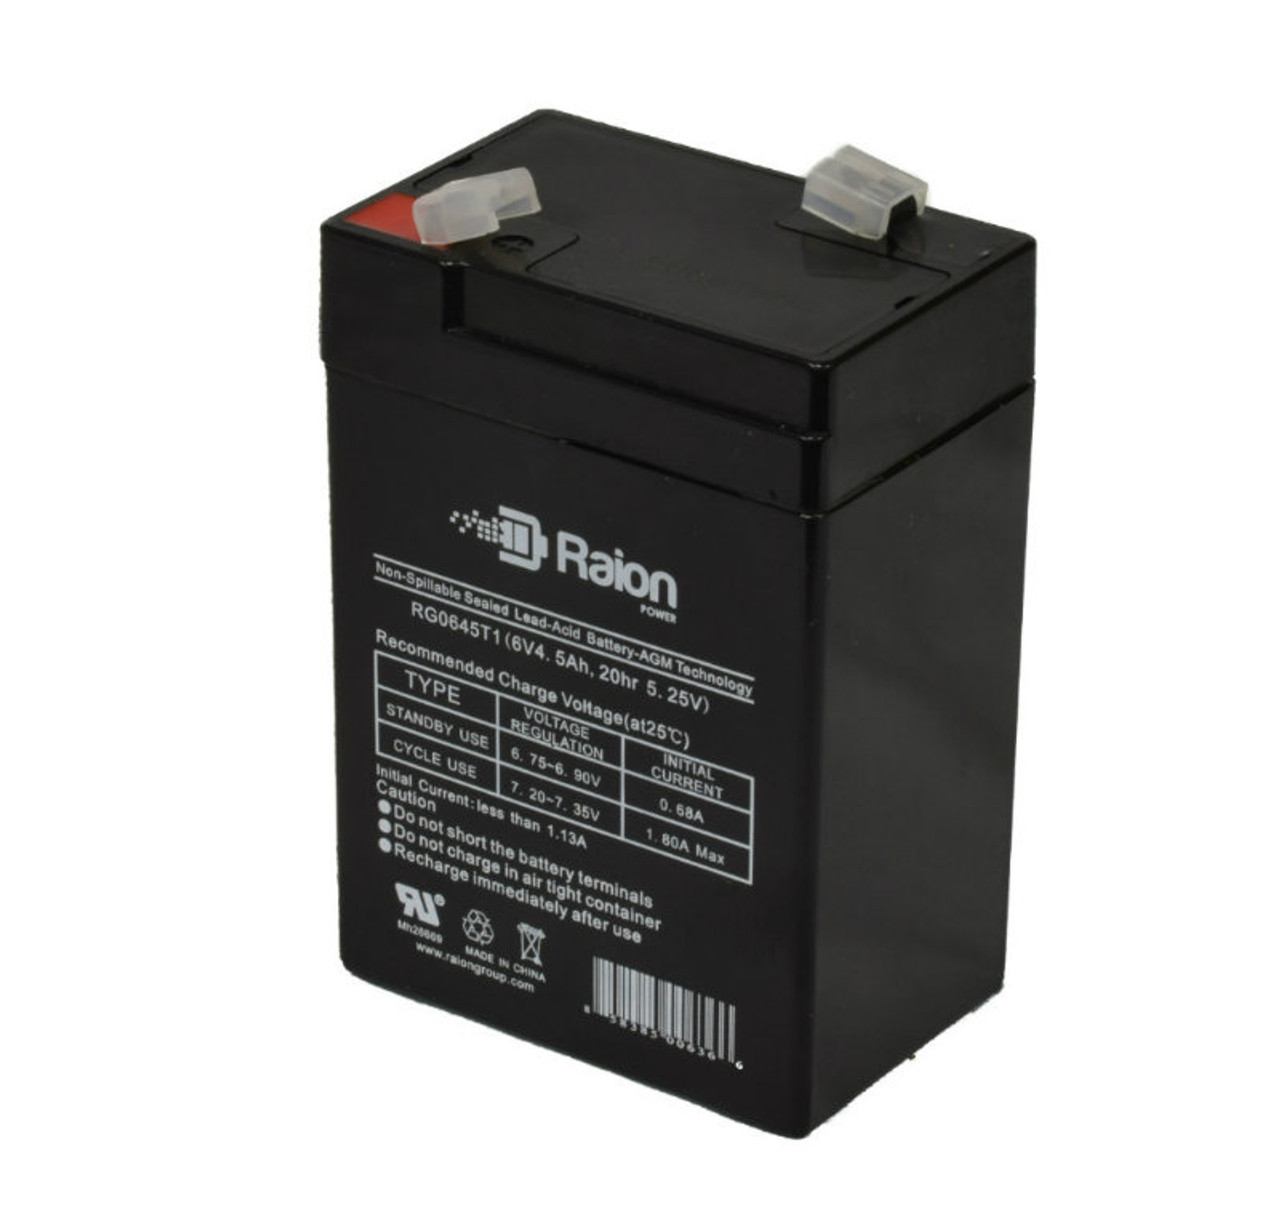 Raion Power RG0645T1 6V 4.5Ah Replacement Battery Cartridge for Vasworld Power GB6-6